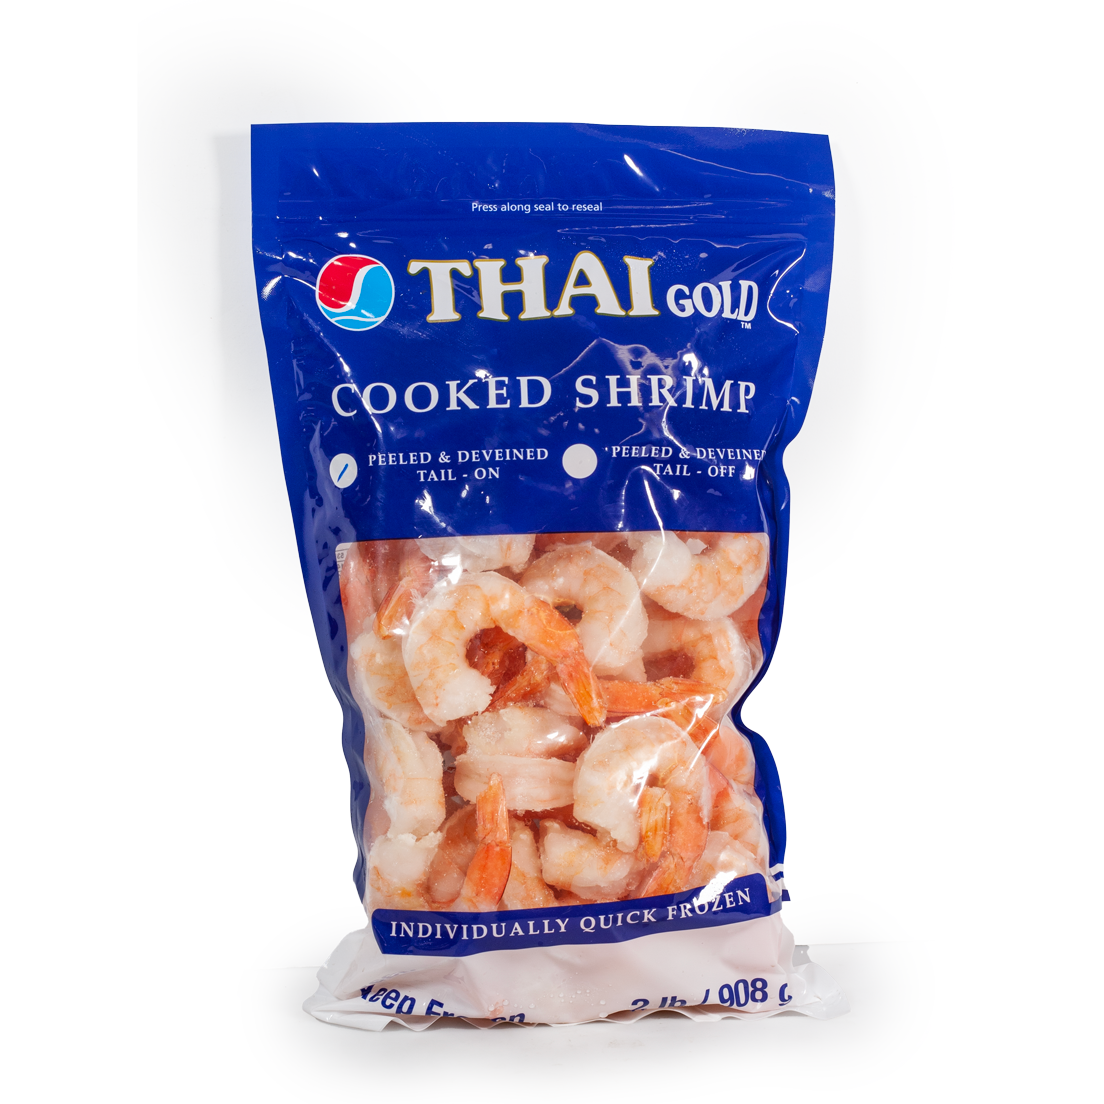 Thai_Gold_Cooked_Shrimp